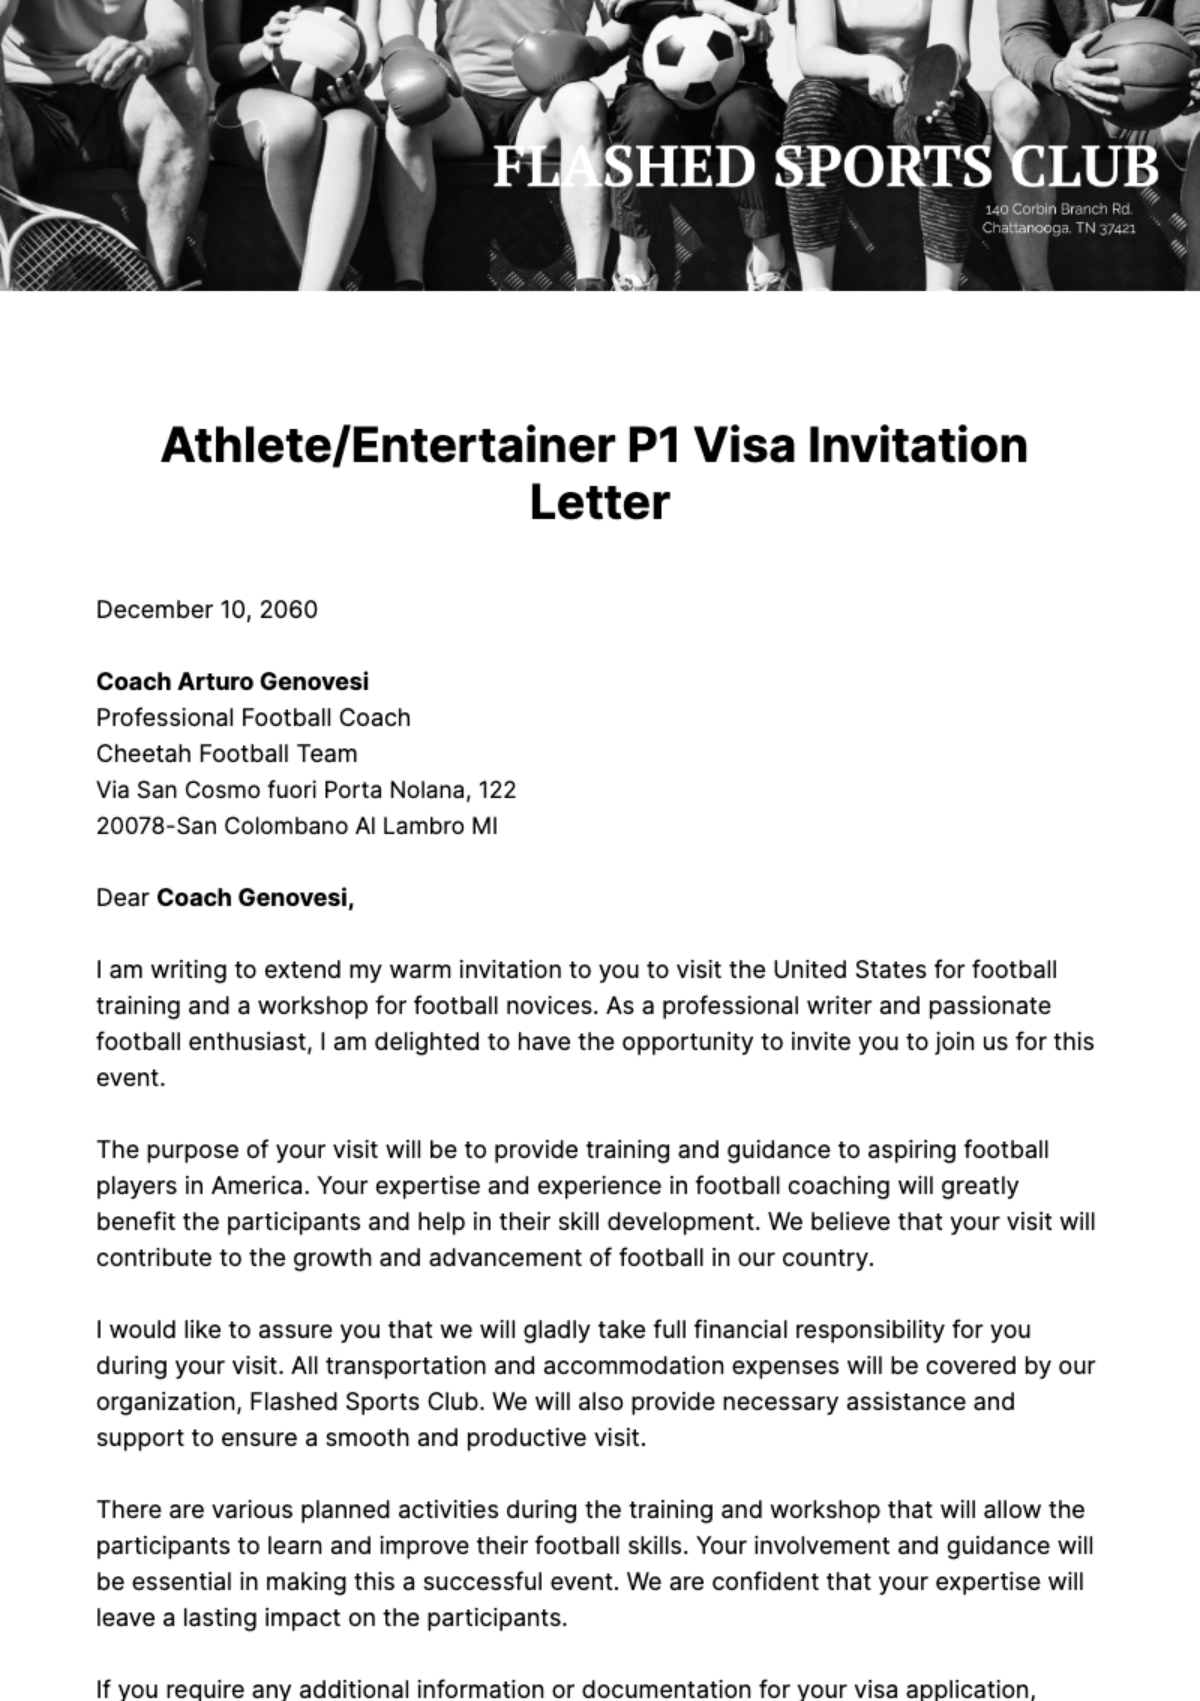 Athlete/Entertainer P1 Visa Invitation Letter Template